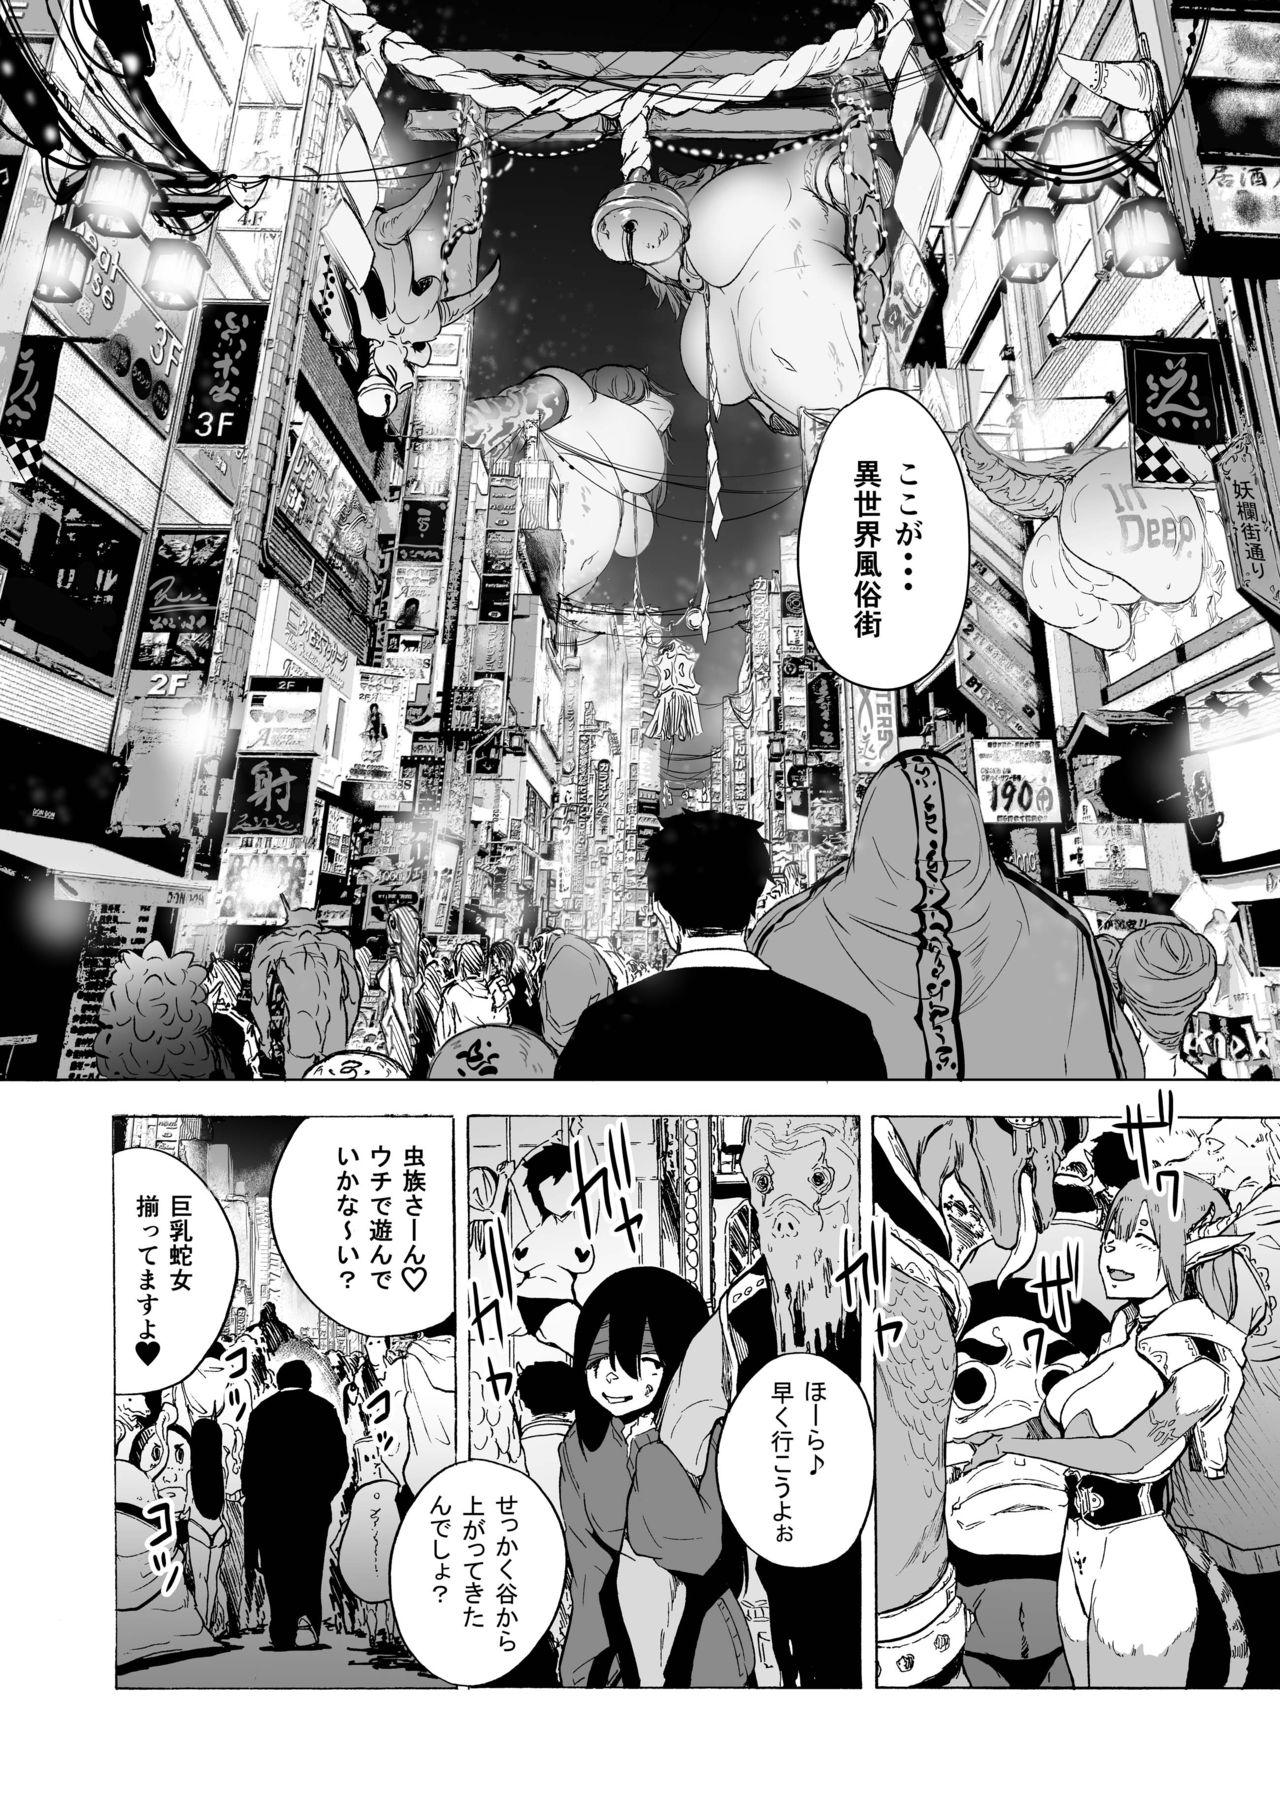 Stunning 『亜人風俗』コミックアンソロジー - Original Pain - Page 11